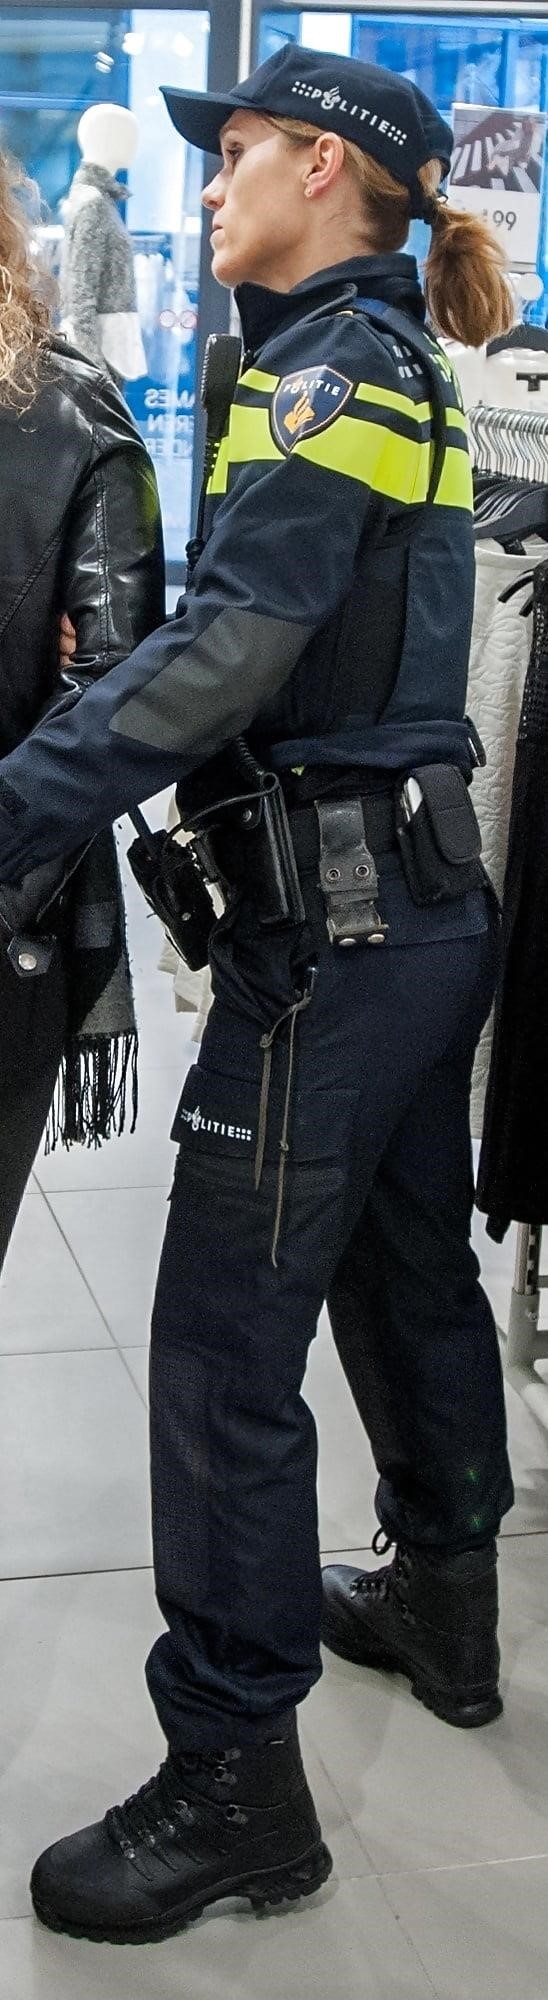 Hot sexy police women-8976